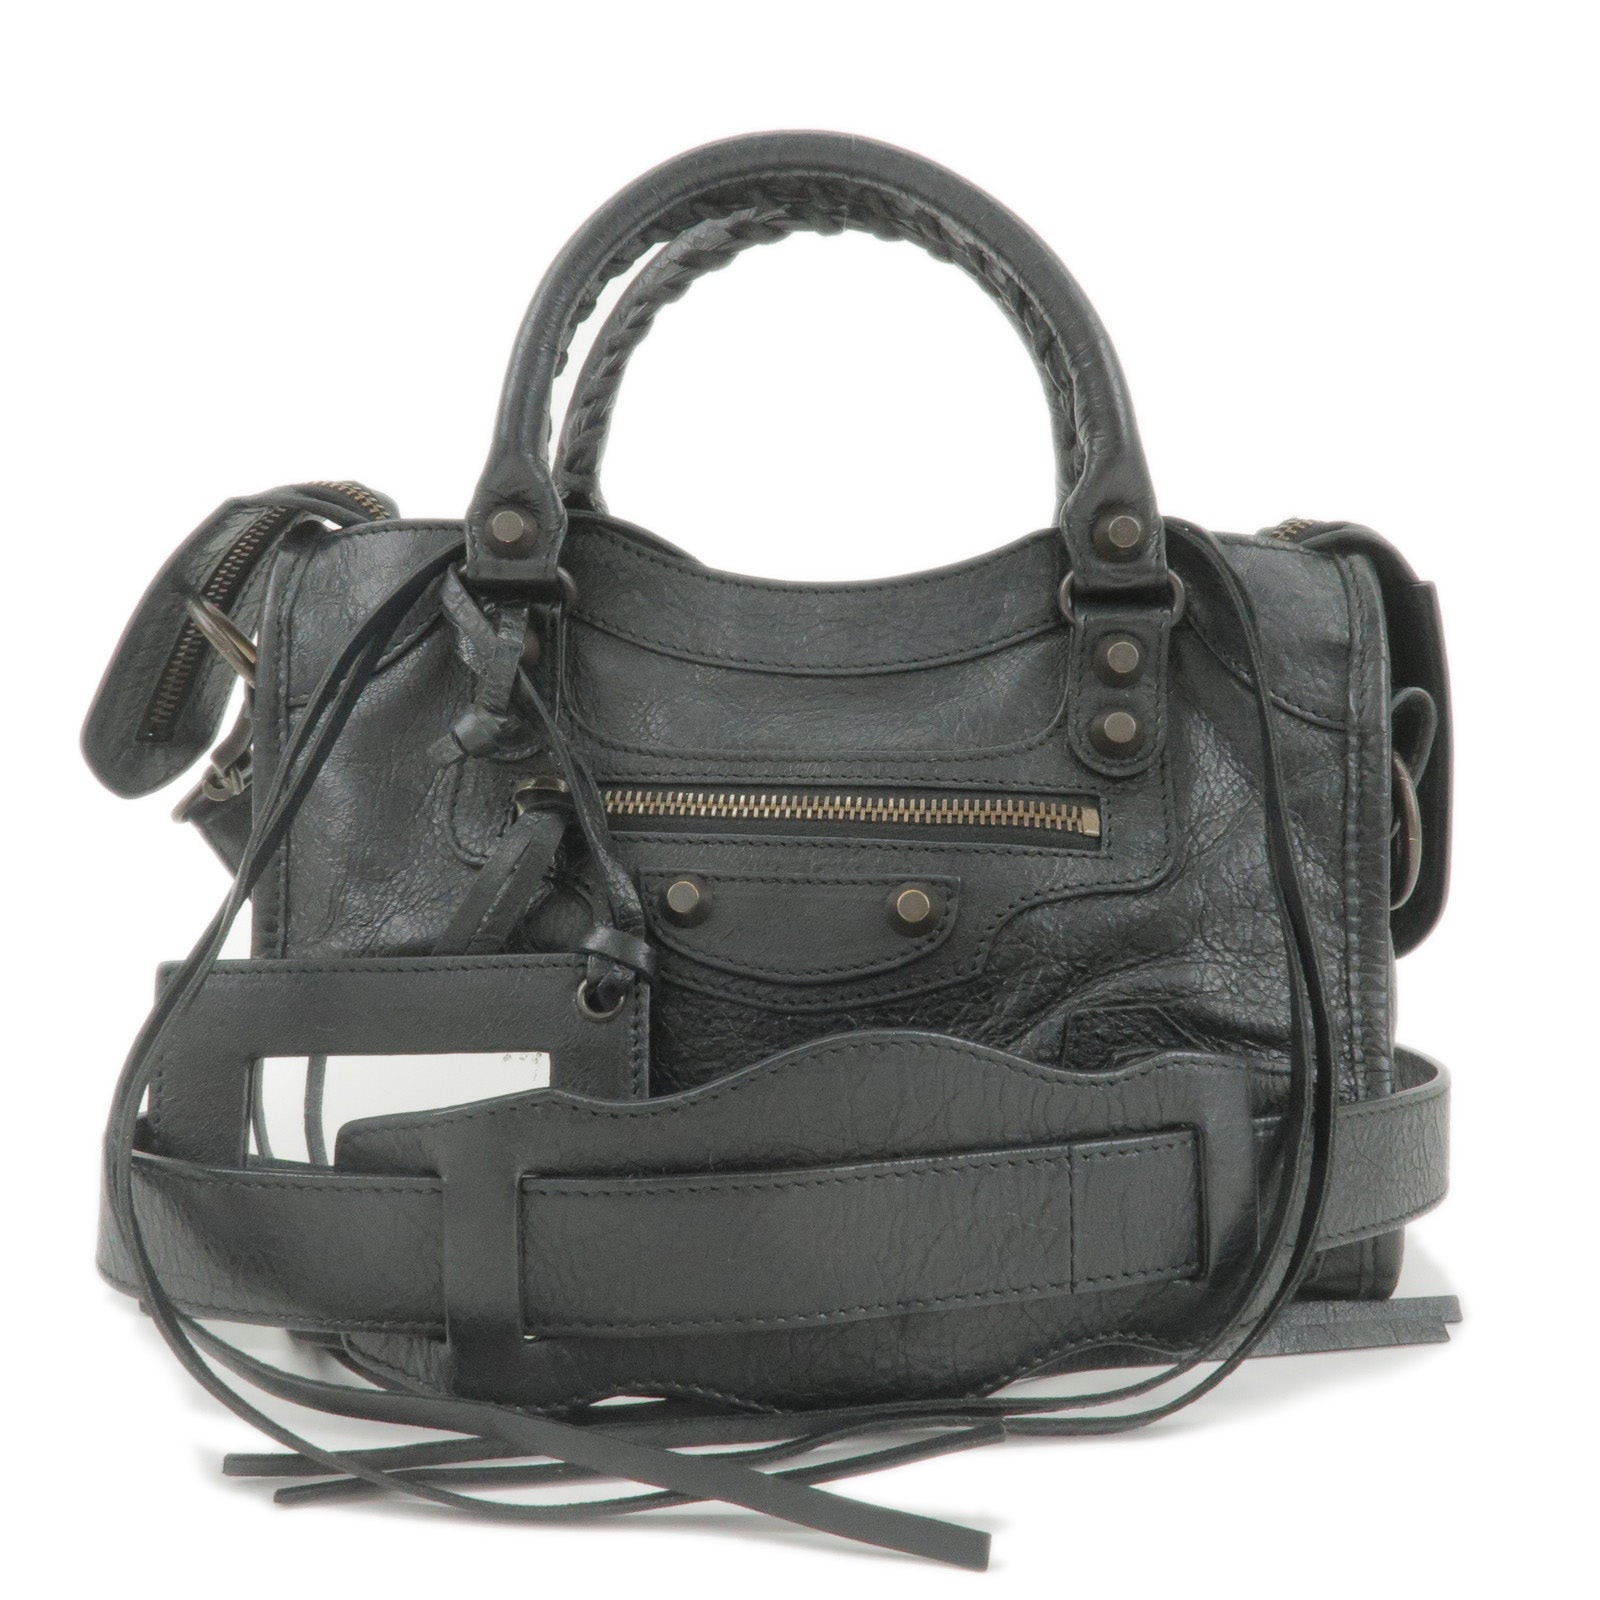 owned Fourre Toute bag - AMI - 2Way - Classic - Fila Μemory Print 3 Kid's Shoes with a Free Backpack - City - Leather - Mini - BALENCIAGA - Bag AMI - 300295 Pre - Black